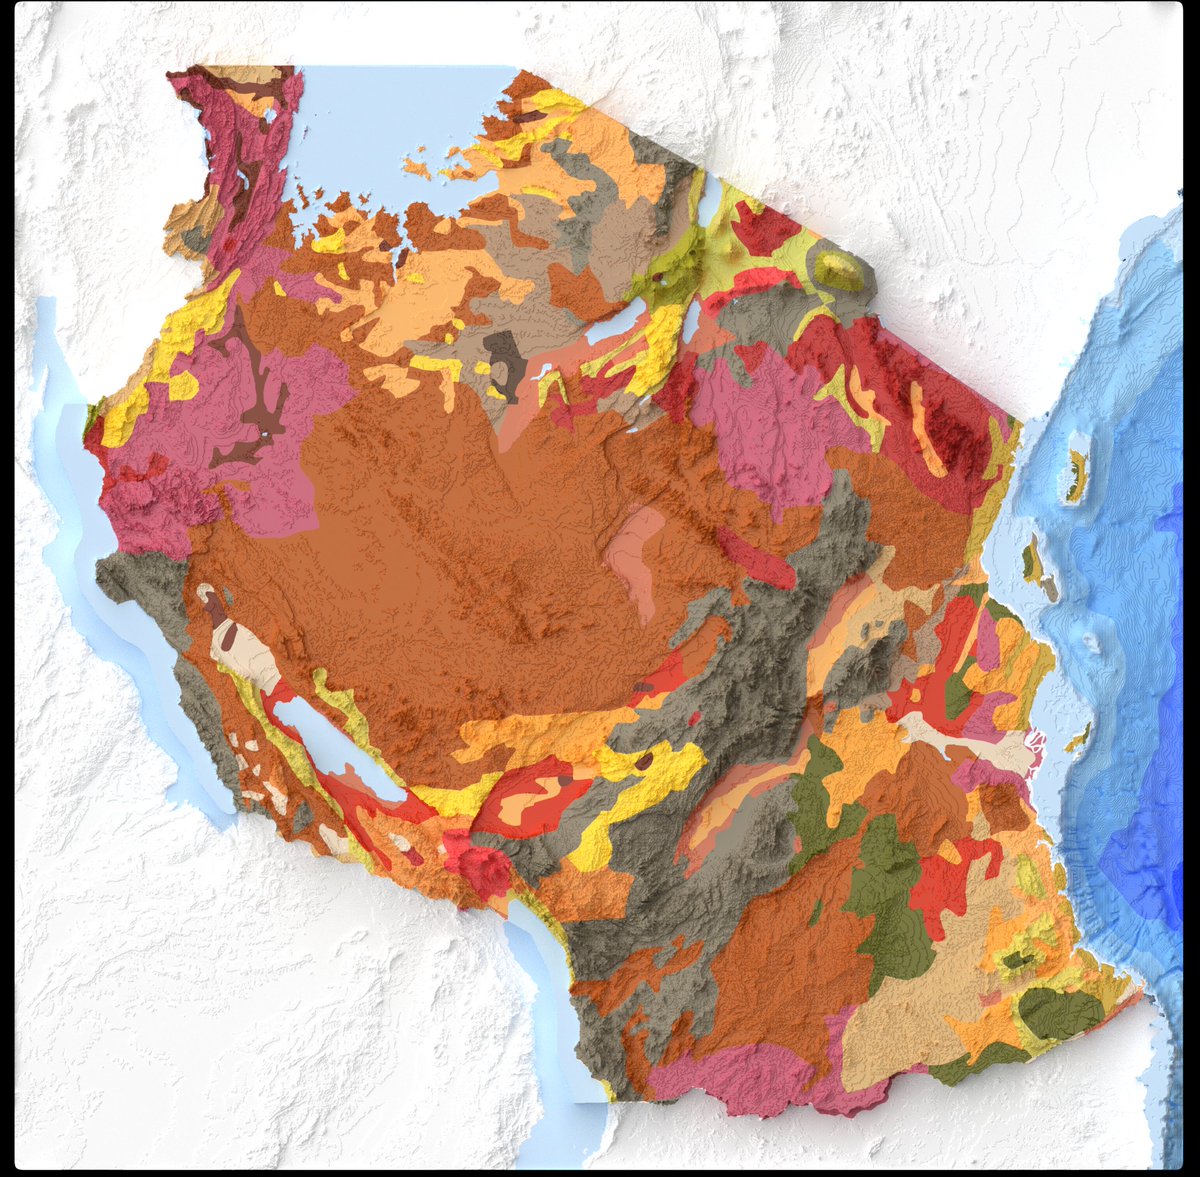 Tanzania🇹🇿
Soil map
#geospatial #gischat  #Basin #dataviz #render #qgis #blender #b3d